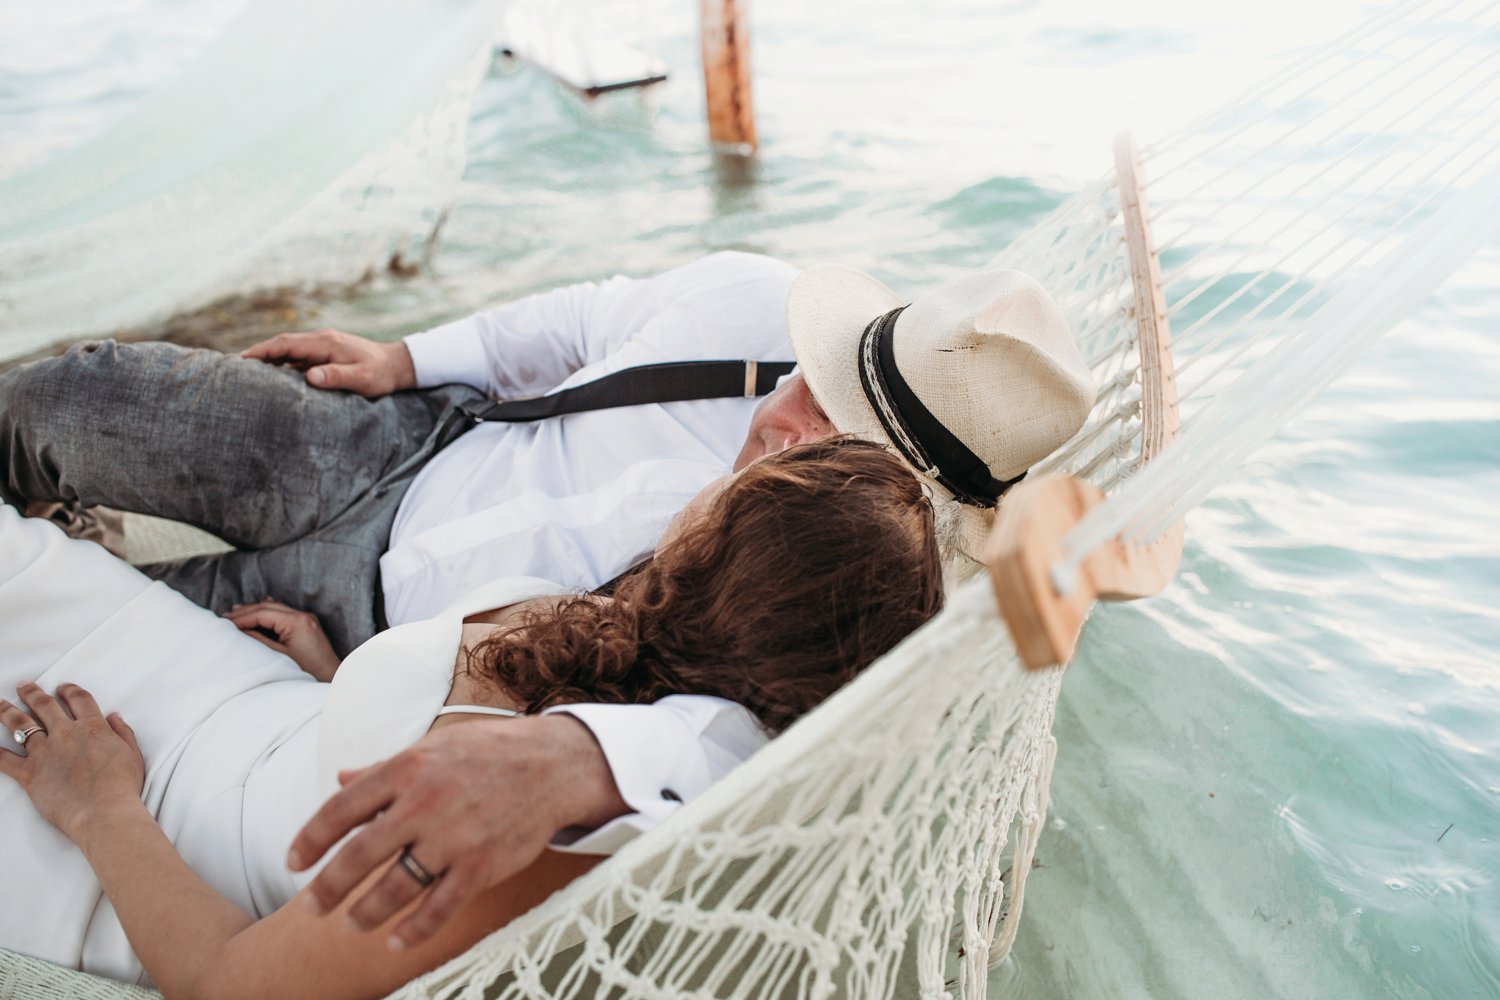  images by feliciathephotographer.com | destination wedding photographer | mexico | tropical | fiji | venue | azul beach resort | riviera maya | sunrise bridal portraits | blue waters | hammocking over the ocean | romantic | whimsical | elegant | 